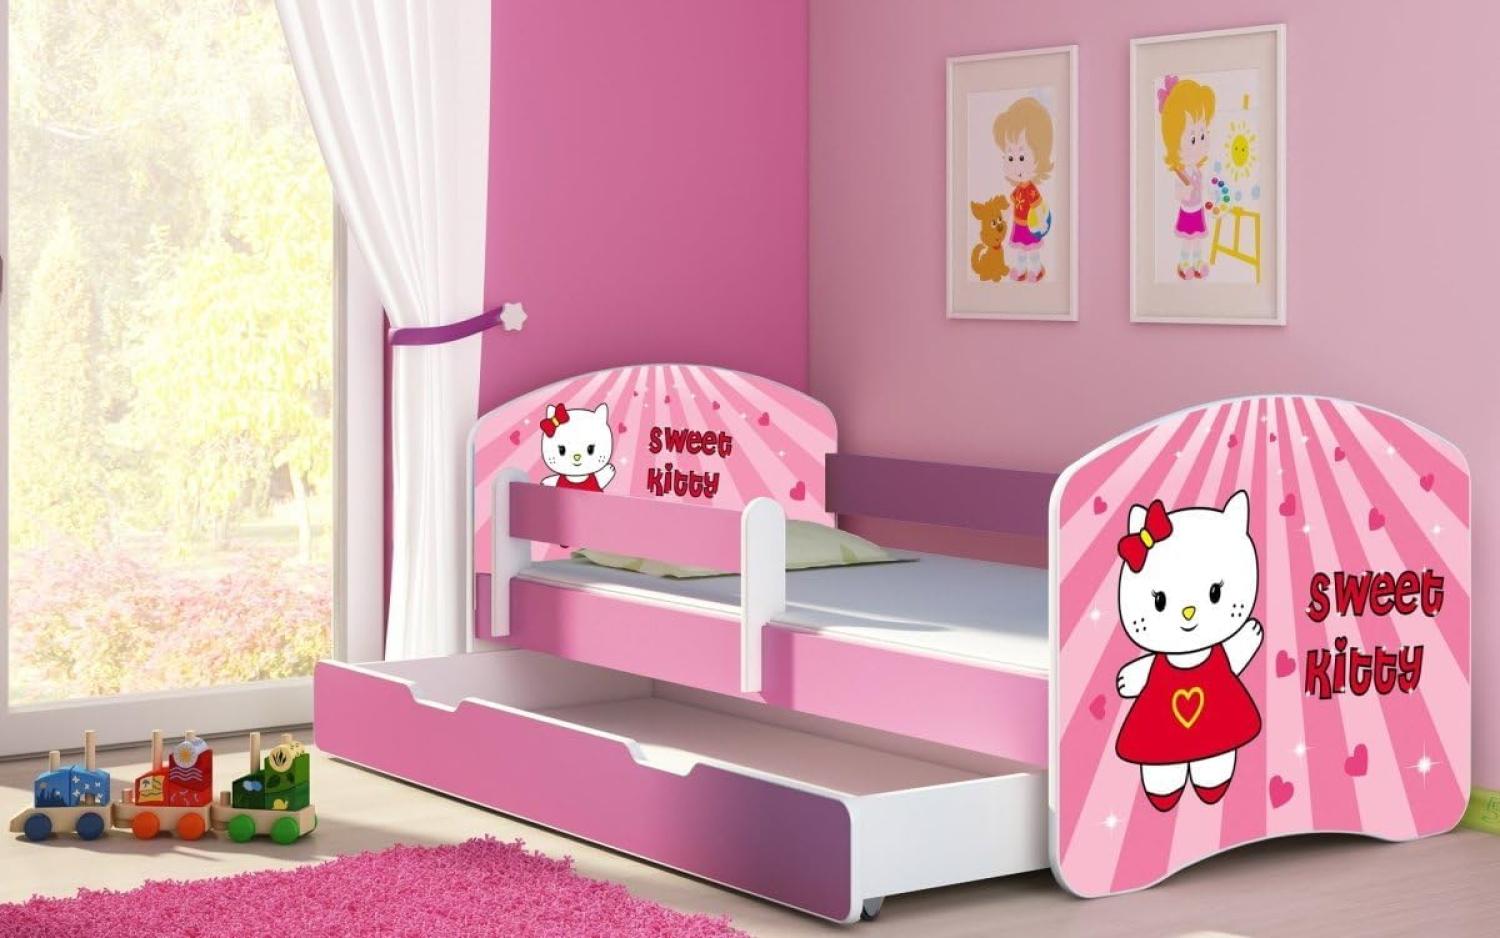 Kinderbett Dream mit verschiedenen Motiven 180x80 Sweetkitty Hearts Bild 1